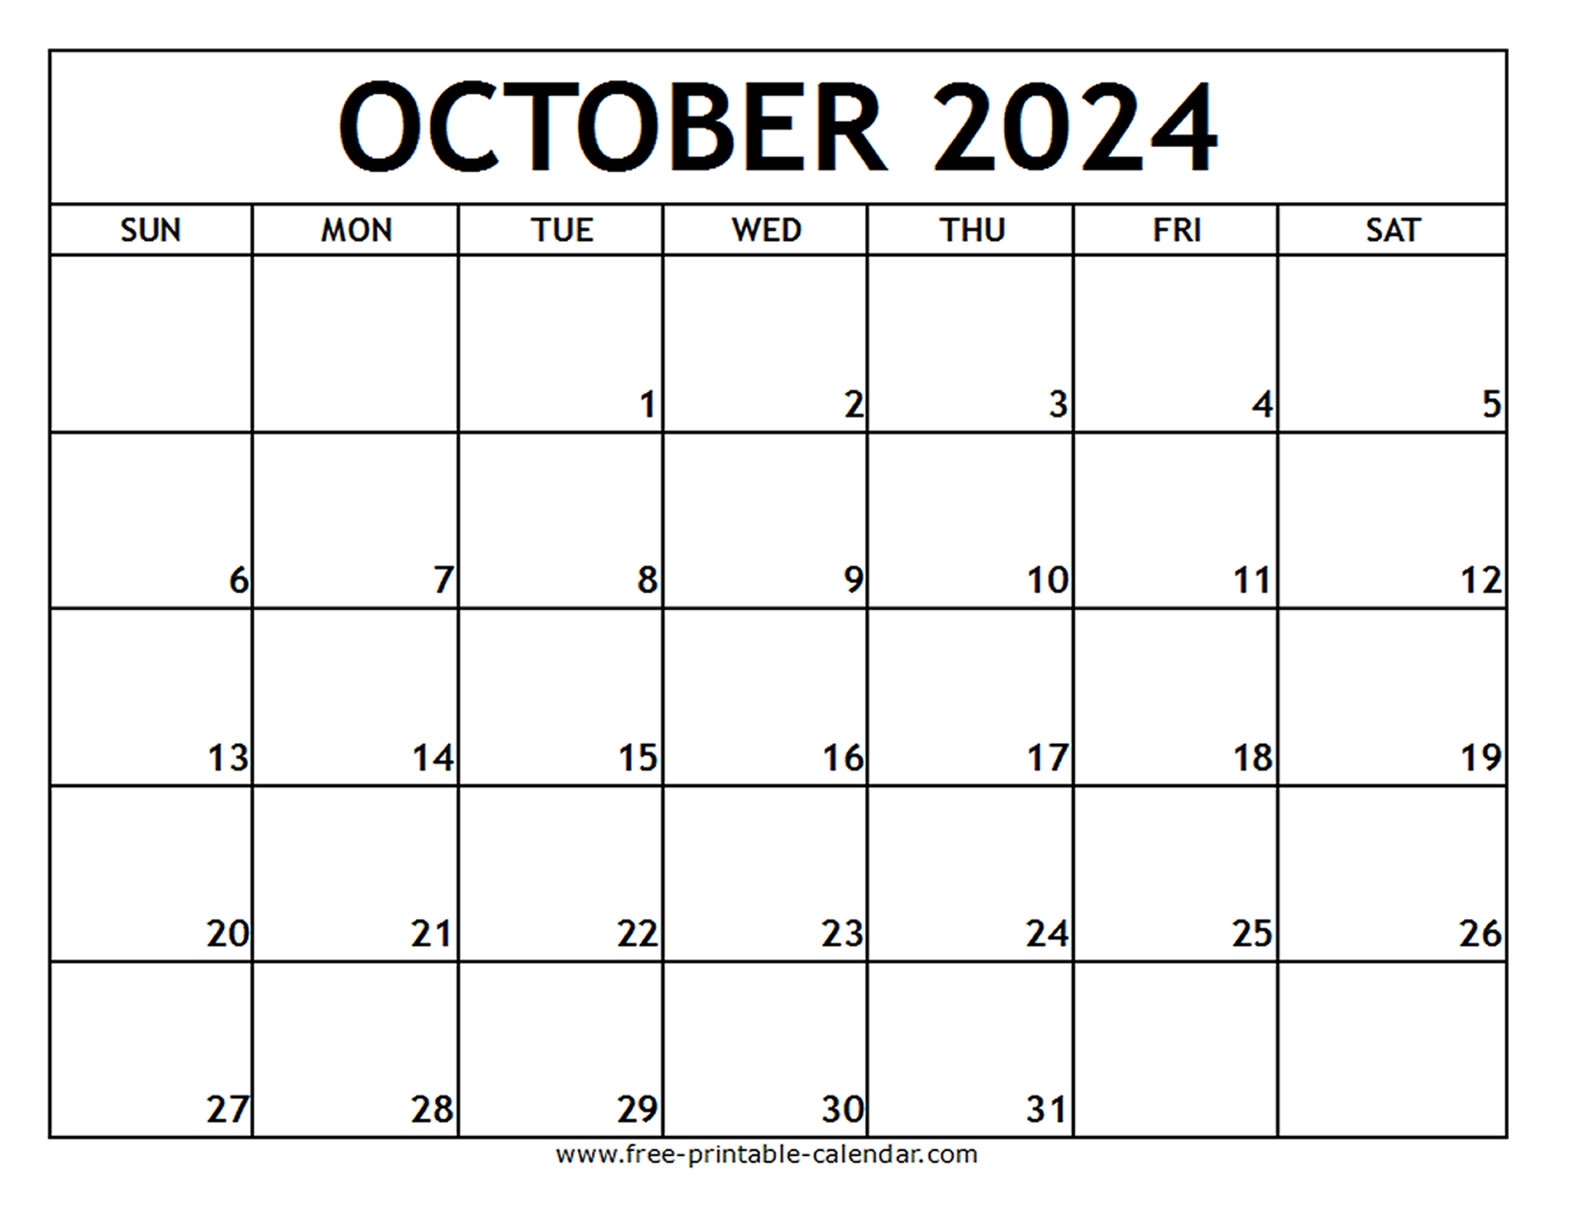 October 2024 Printable Calendar - Free-Printable-Calendar regarding Free Printable Blank Calendar October 2024